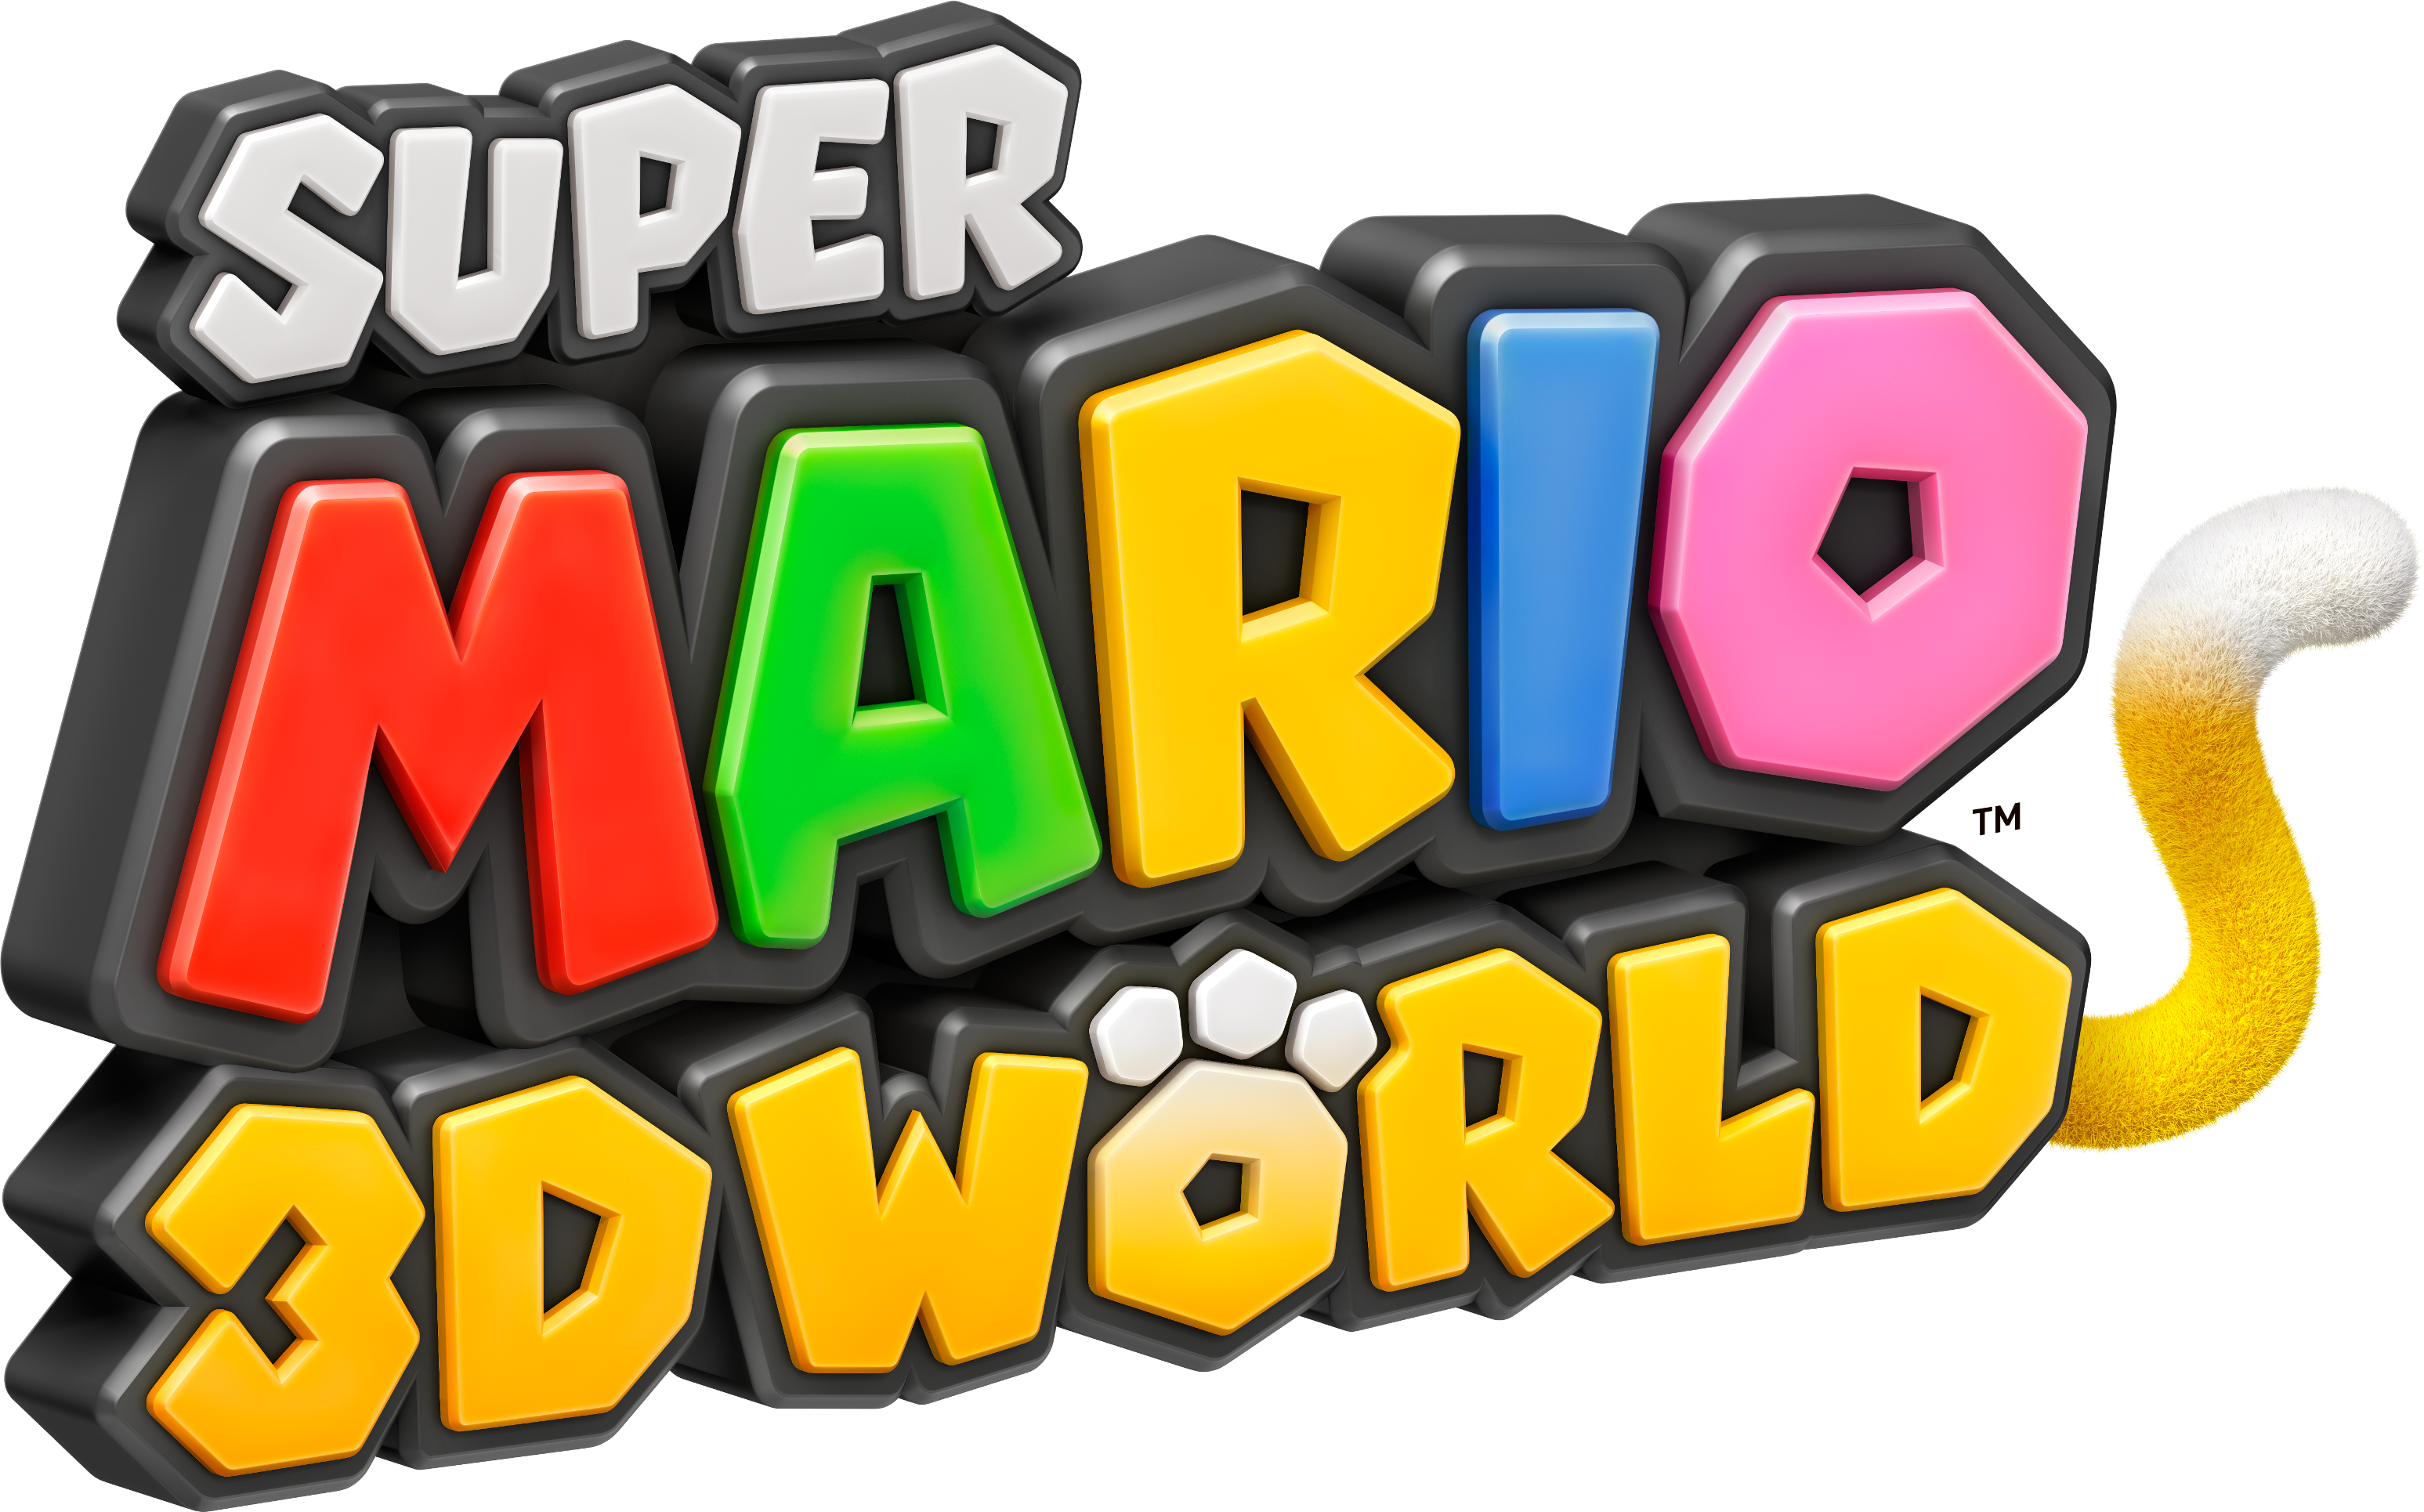 super mario 3d world 2013